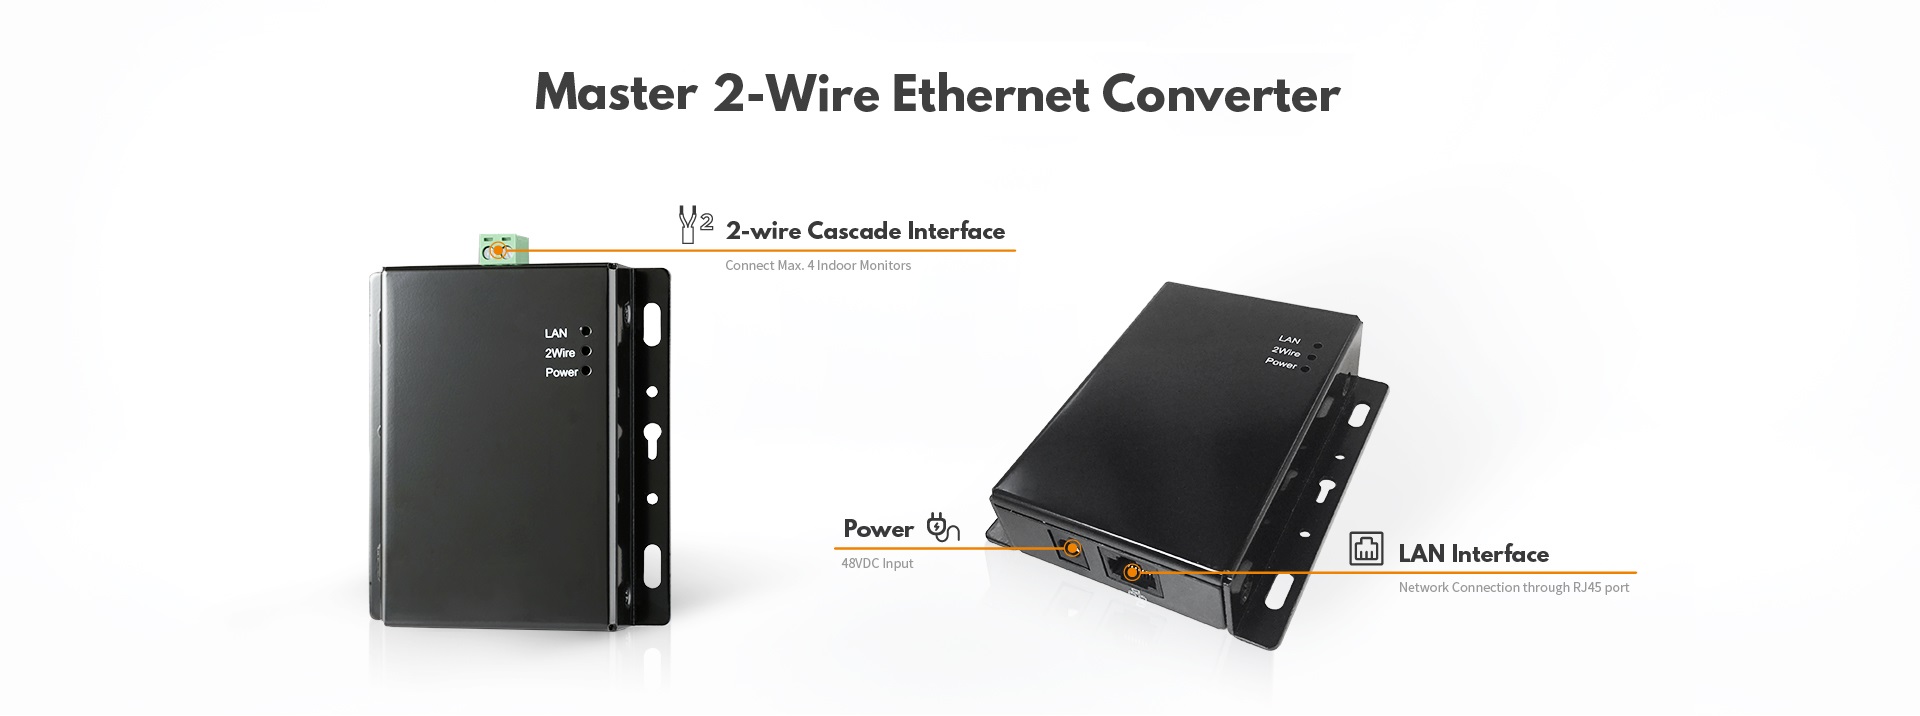 Master 2-Wire Ethernet Converter